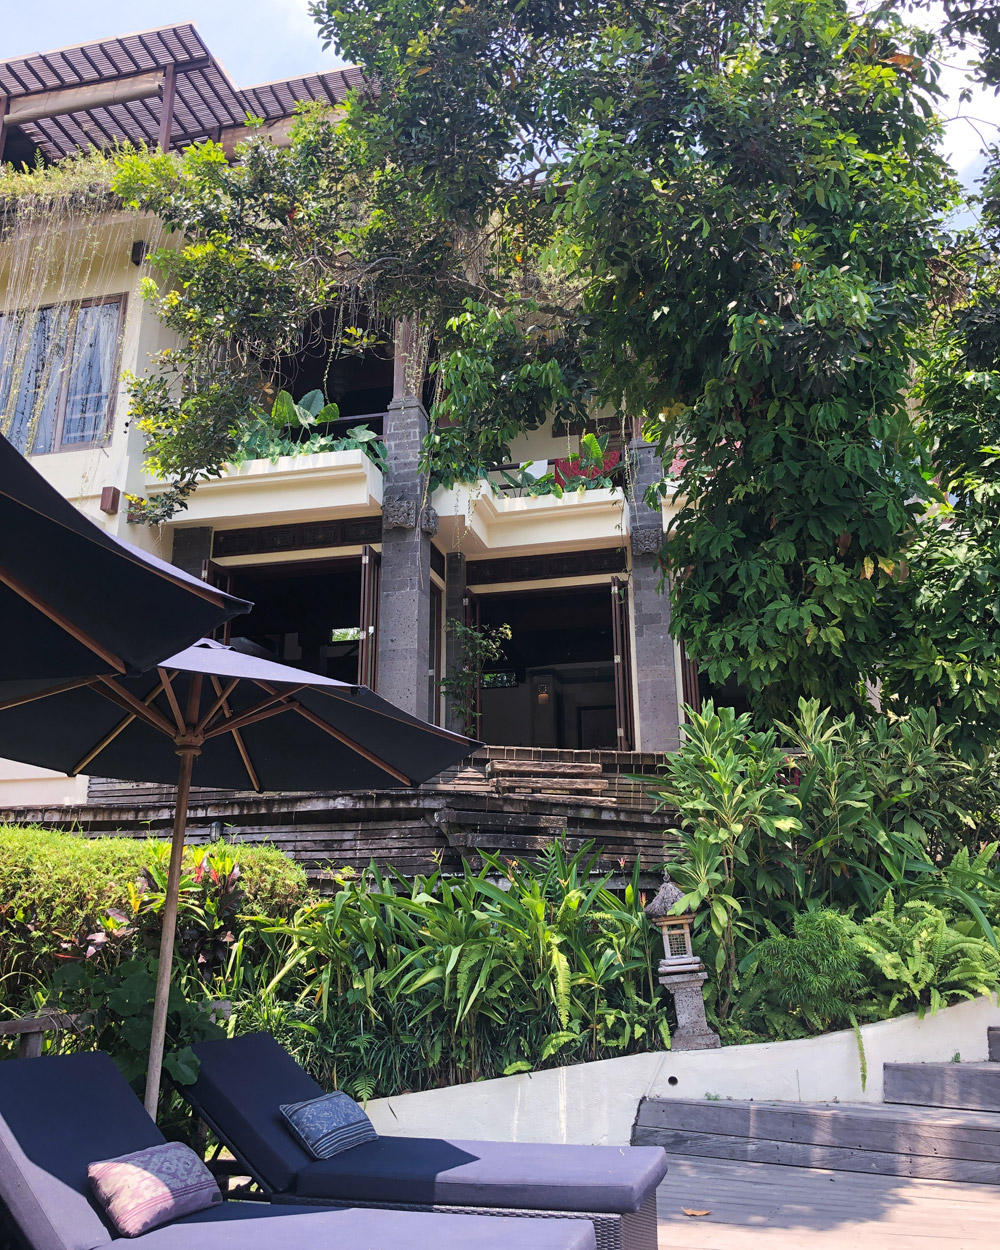 Soulshine Bali, yoga retreat and resort in Ubud, Bali, Indonesia